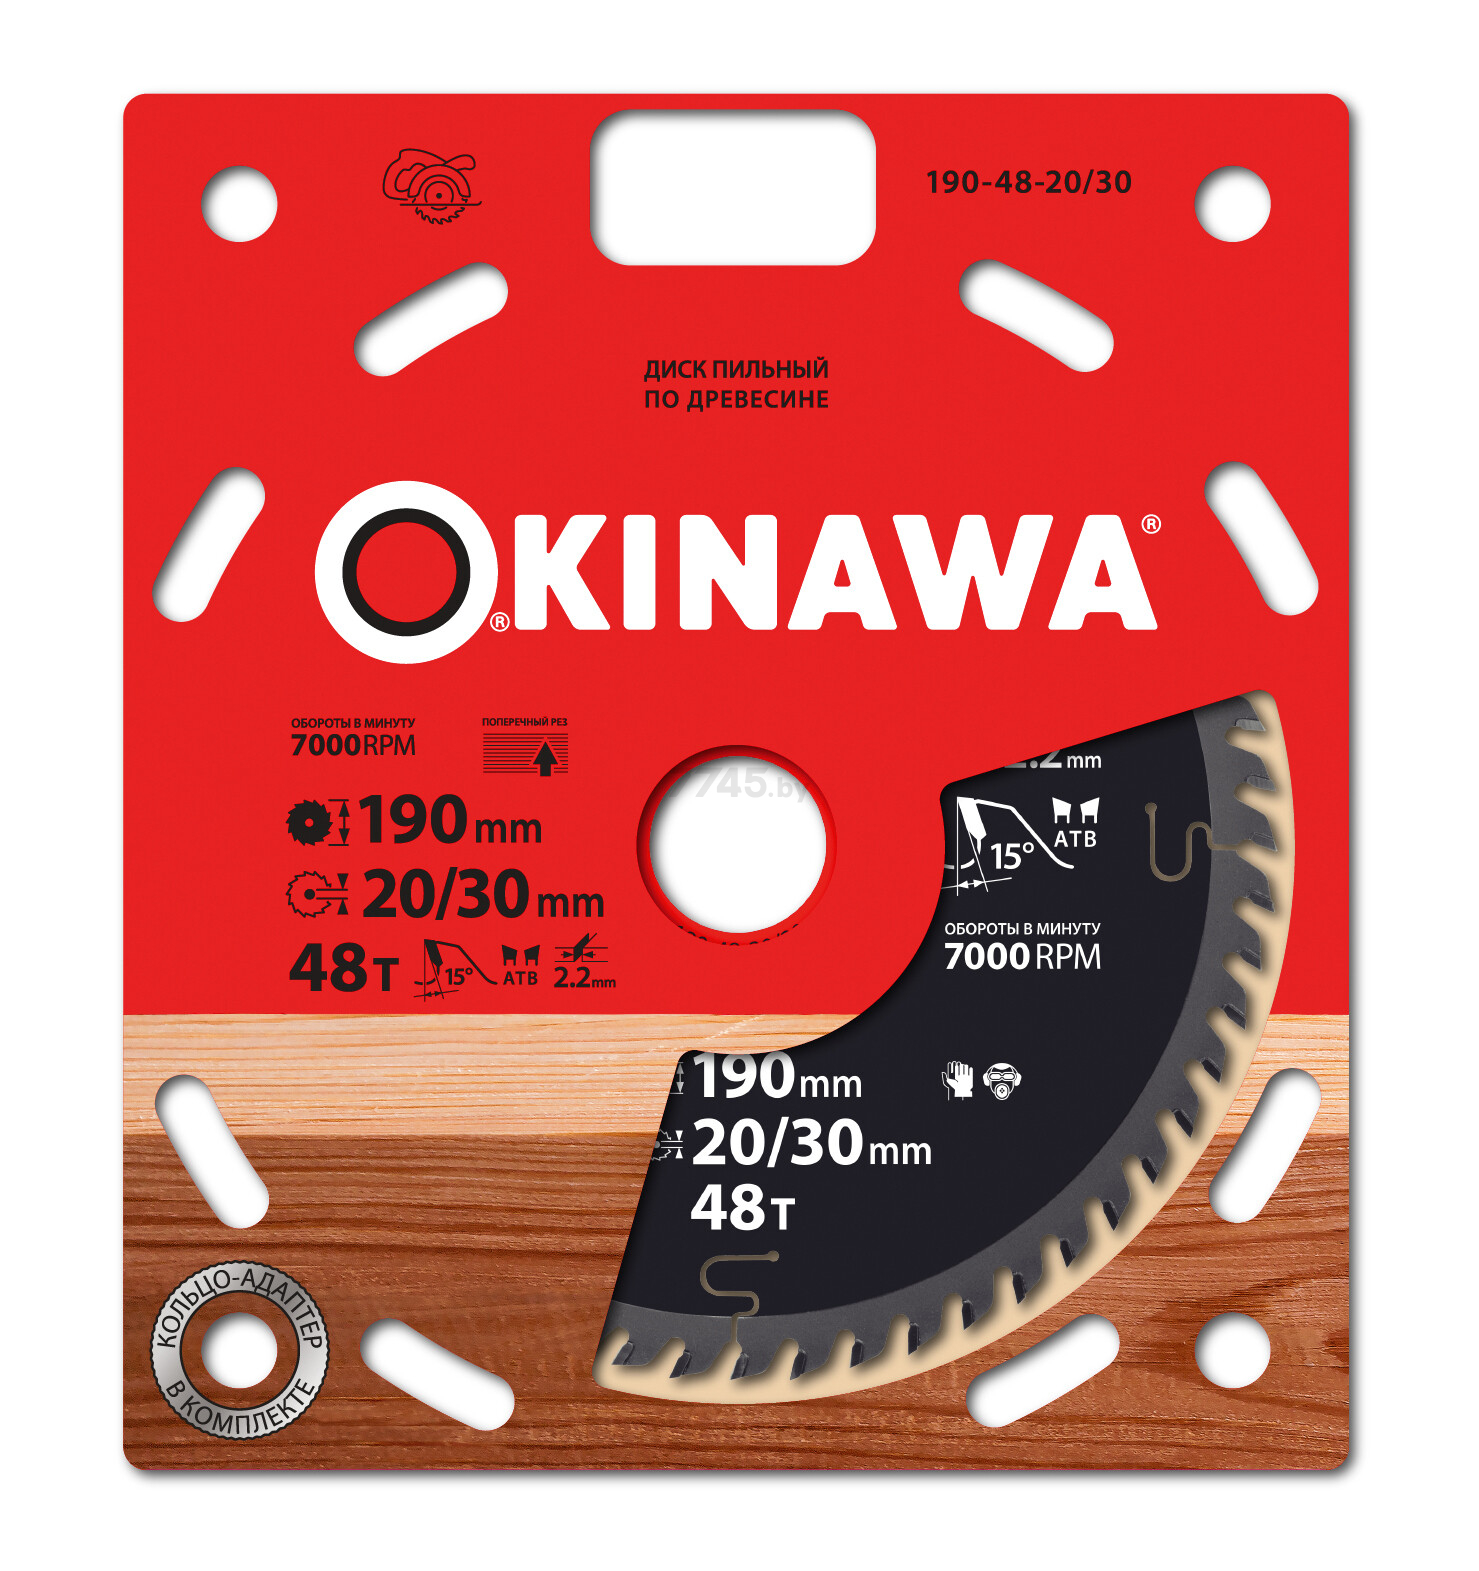 Диск пильный 190х20/30 48 зубьев OKINAWA по дереву (190-48-20/30) - Фото 2